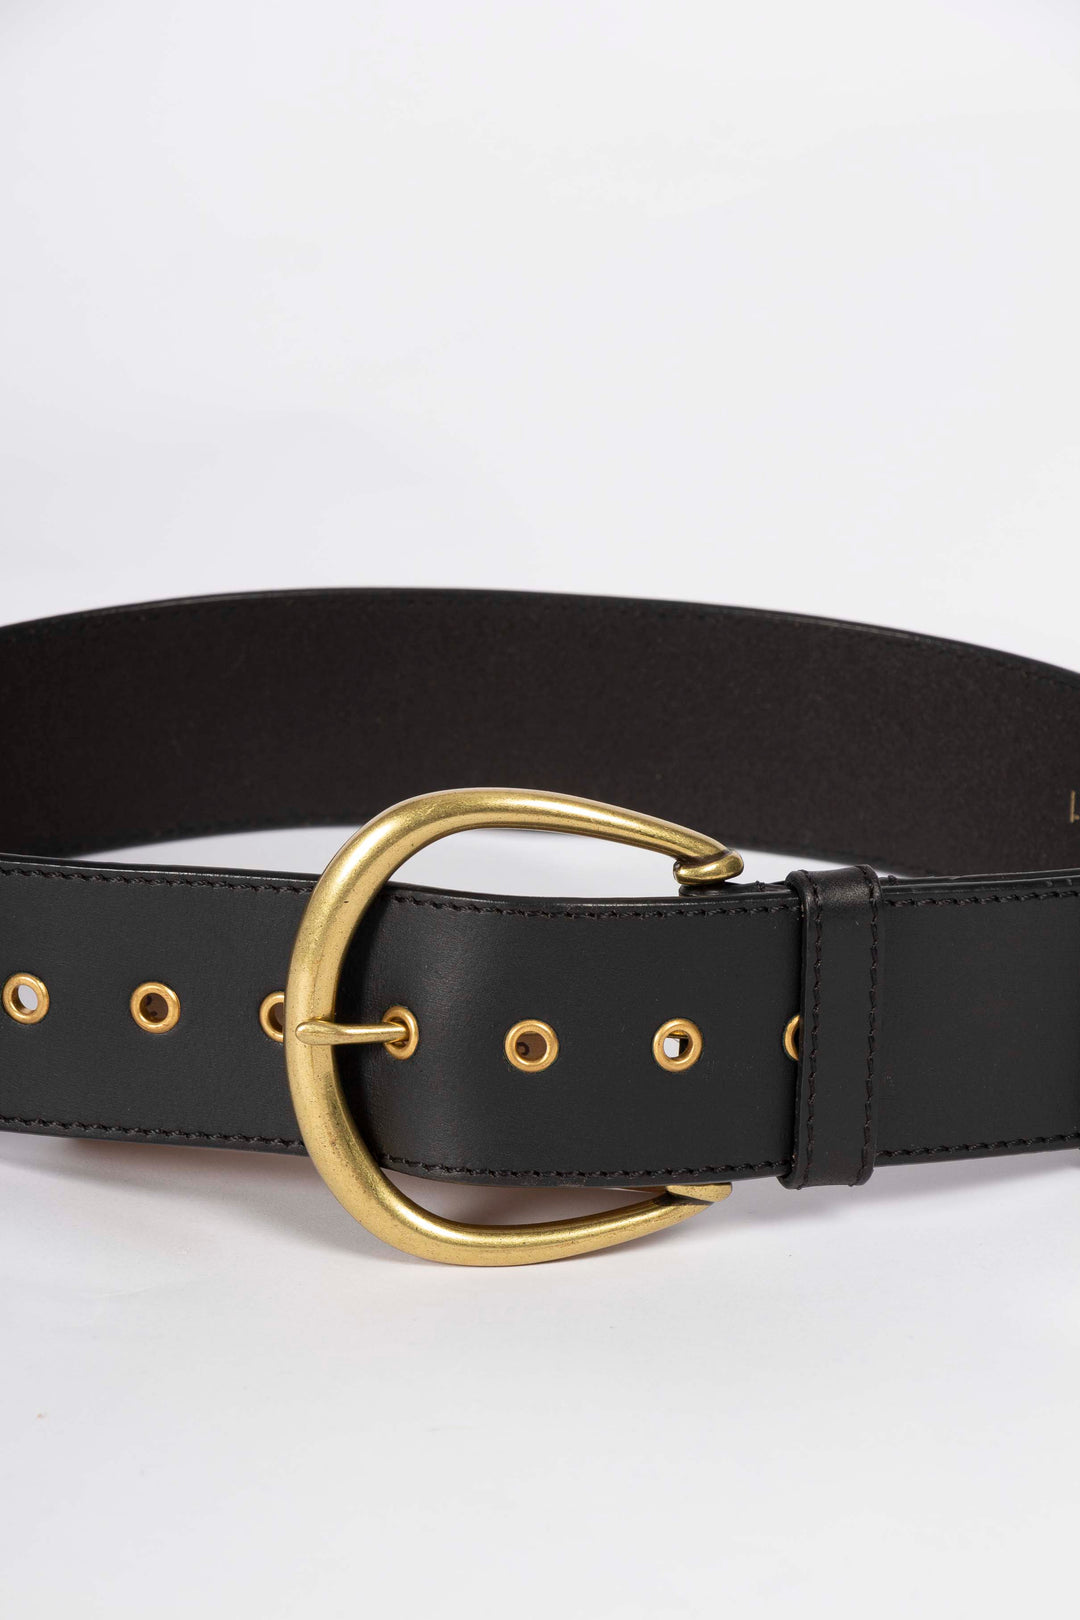 Cowhide leather belt - Petite Mendigote - T1